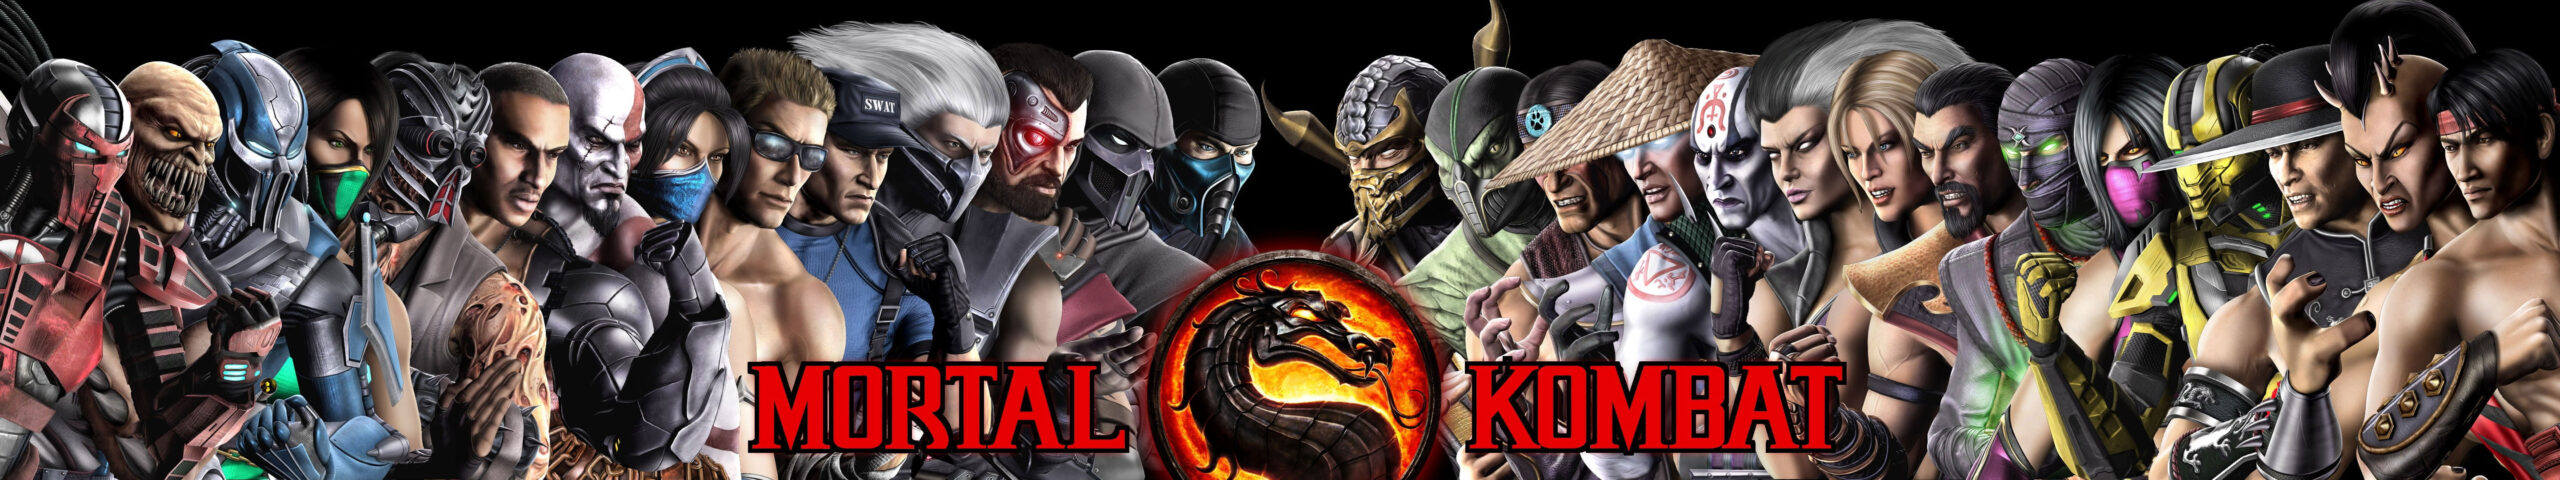 Mortal Kombat Wallpaper, Sub Zero